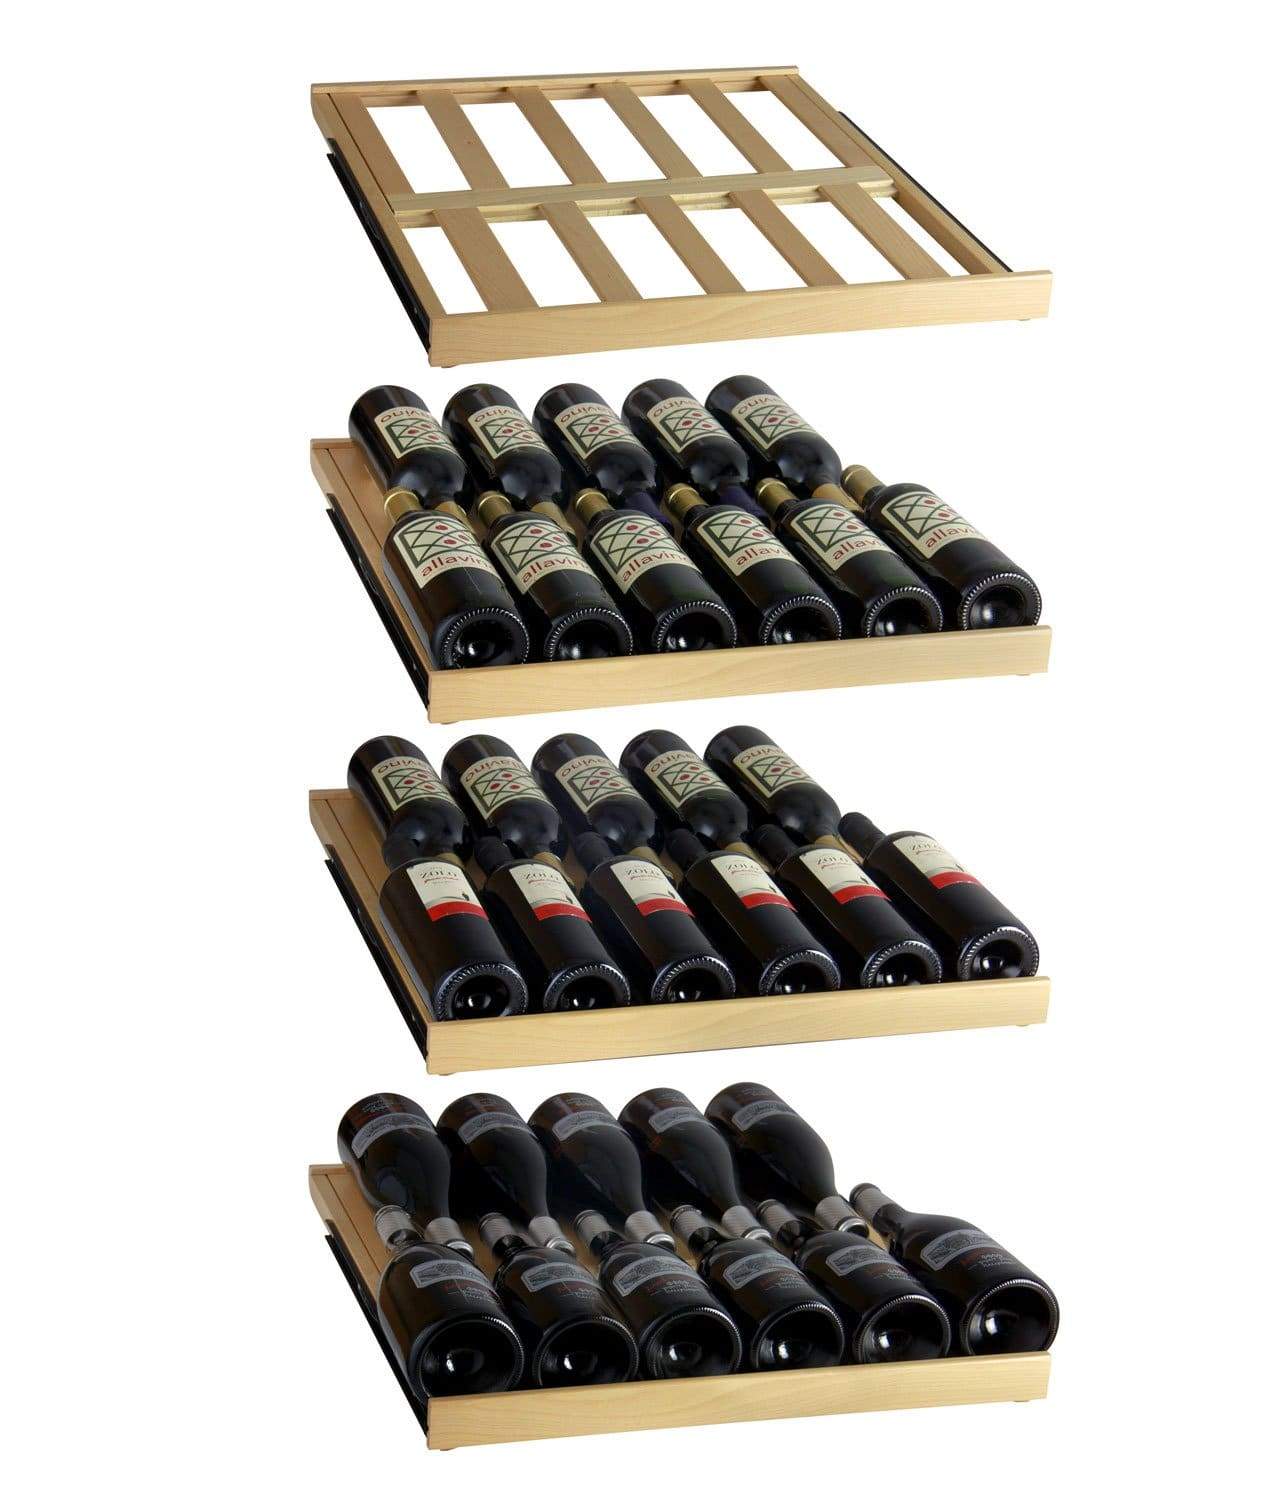 Allavino FlexCount Classic II Tru-Vino 172 Bottle Dual Zone Stainless Steel Left Hinge Wine Refrigerator YHWR172-2SL20 Wine Coolers Empire